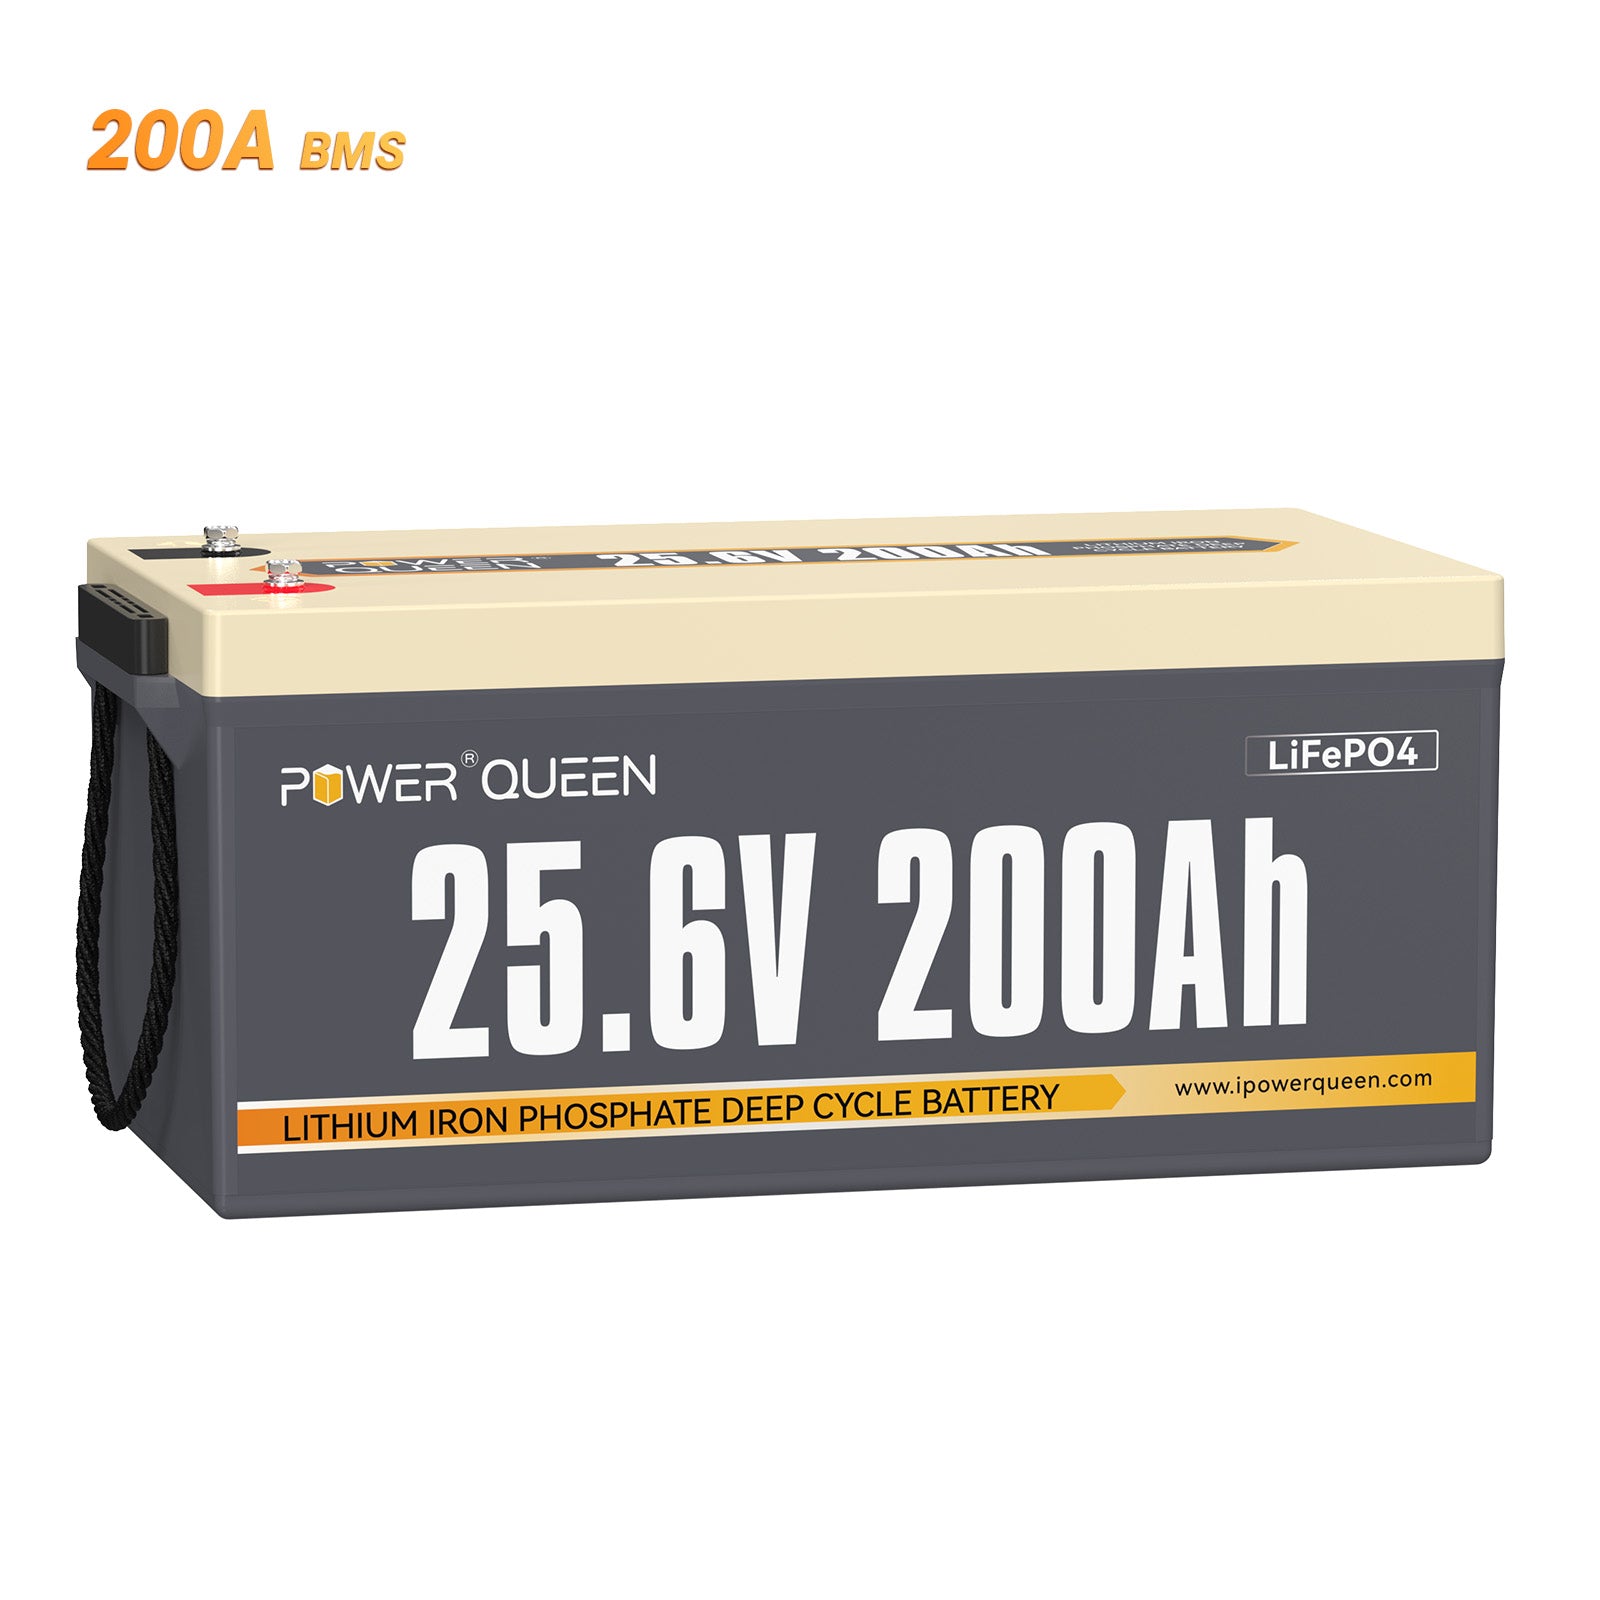 Power Queen 24V 200Ah LiFePO4 accu, ingebouwd 200A BMS